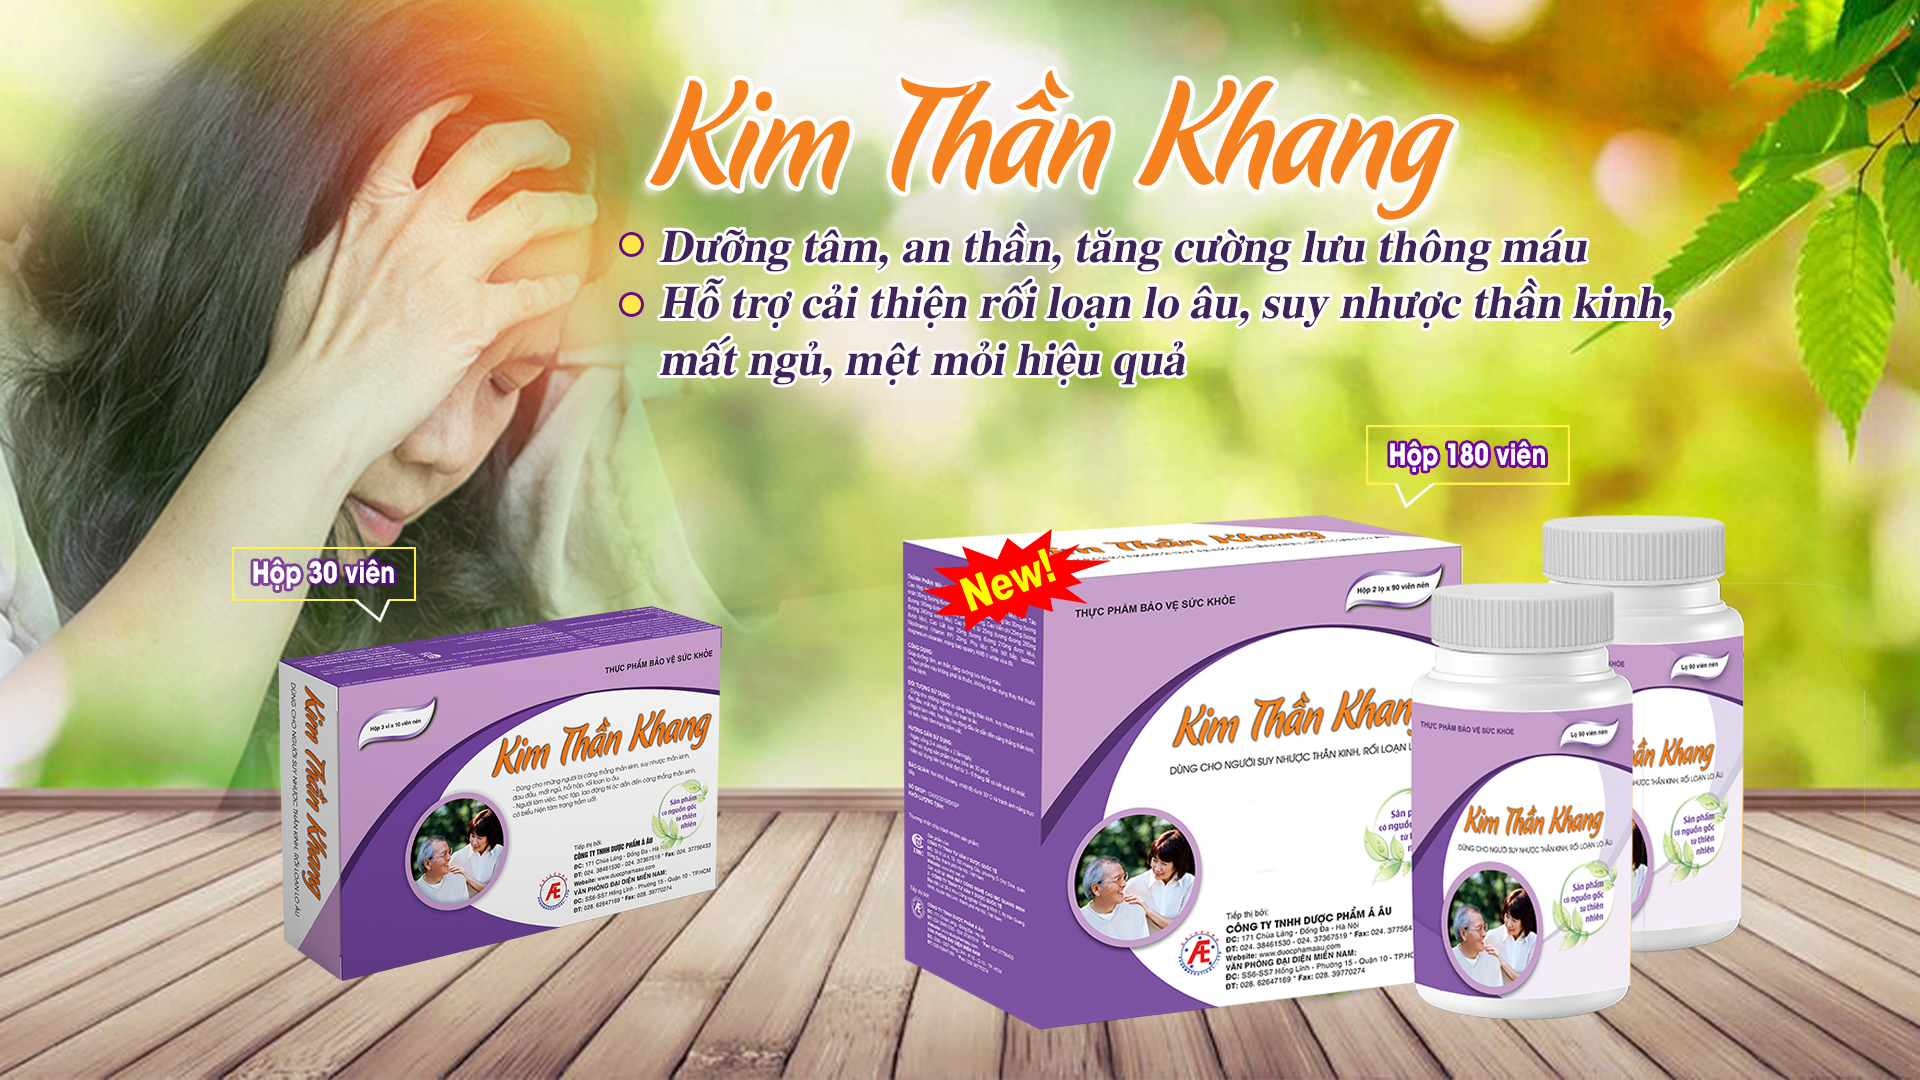 Kim-Than-Khang-giup-ho-tro-dieu-tri-roi-loan-lo-au.jpg